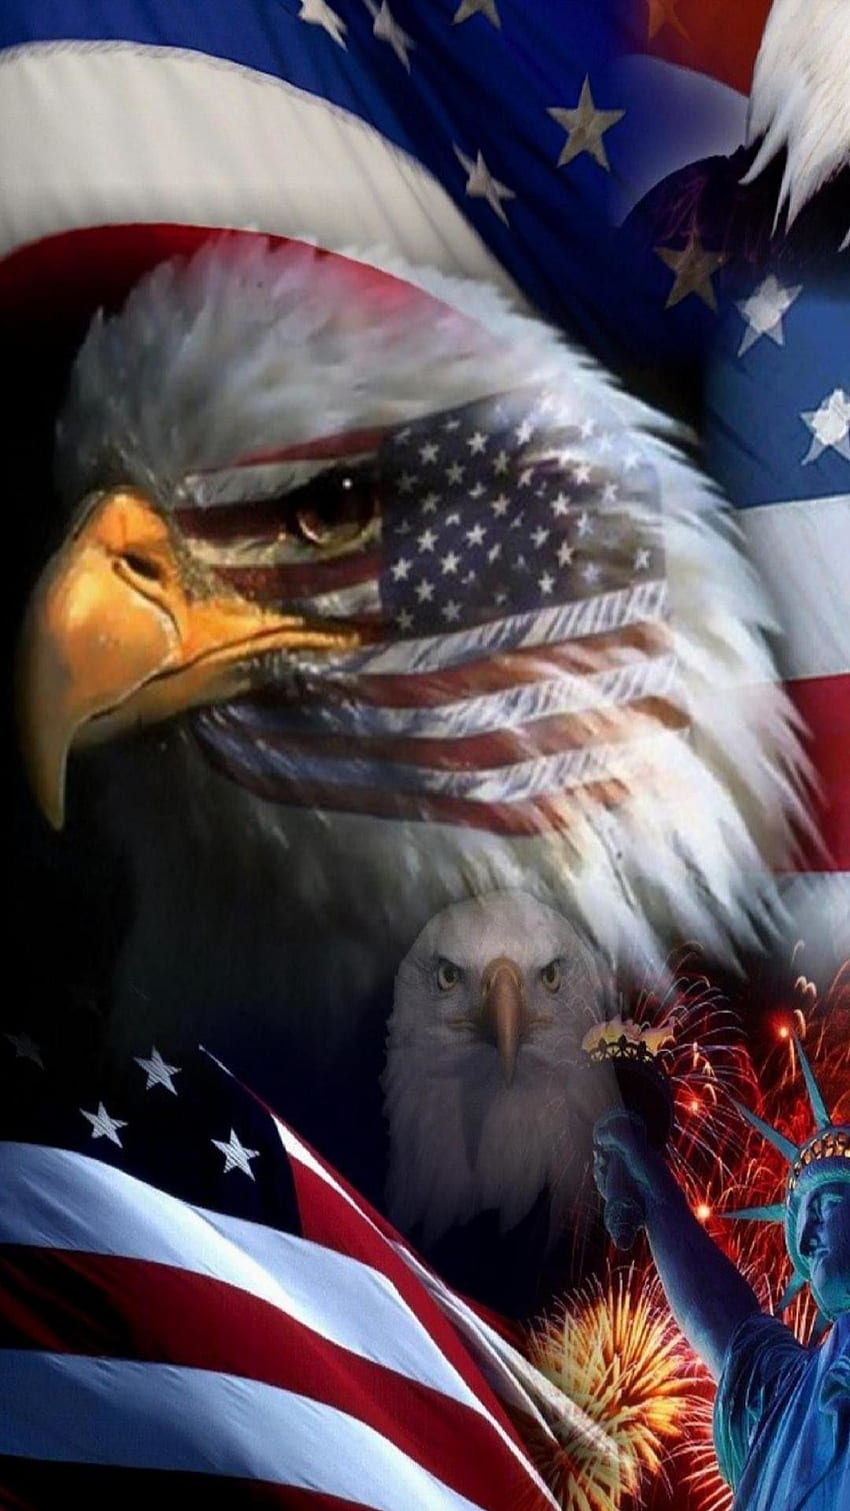 Cool American Flag iPhone HD phone wallpaper